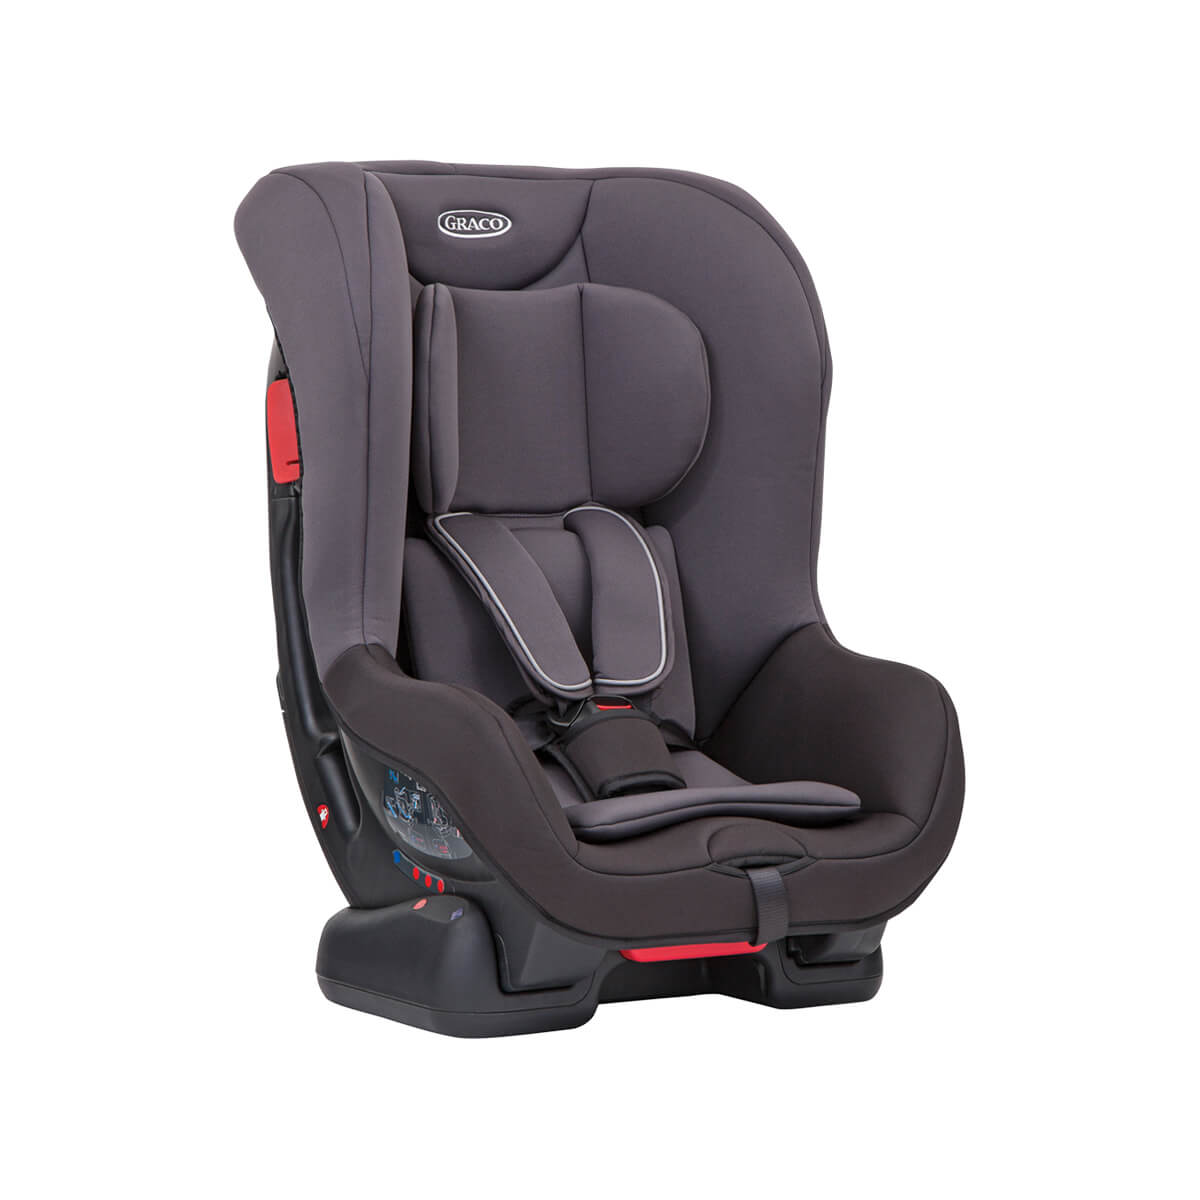 https://dd.gracobaby.eu/media/catalog/product/g/r/graco-extend-convertible-car-seat-blackgrey-three-quarter-prod1.jpg?type=product&height=265&width=265